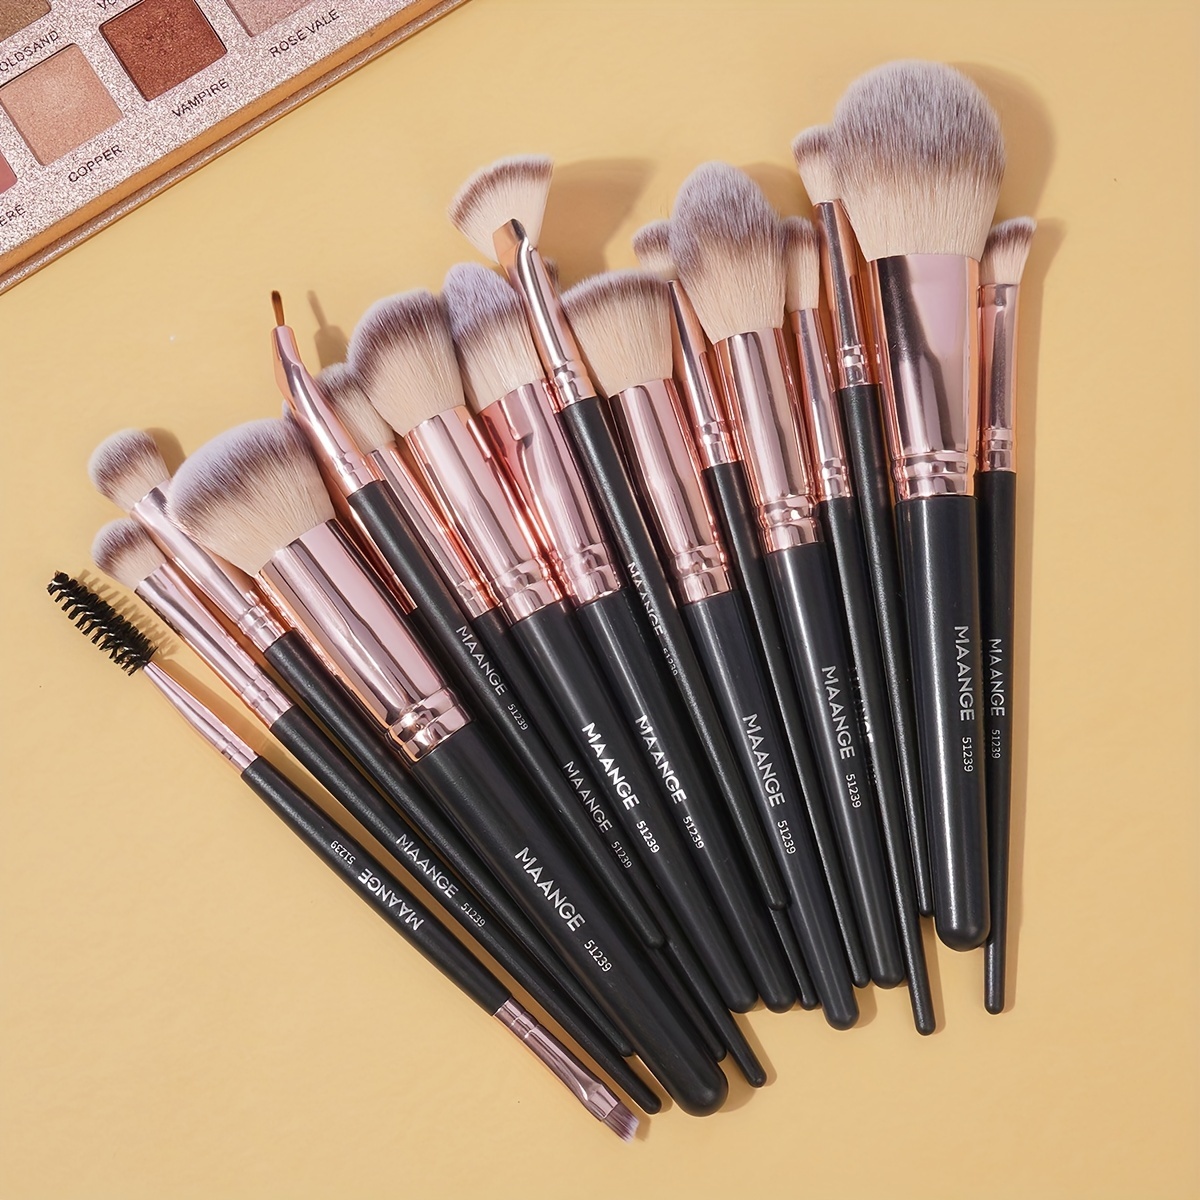 Makeup Brushes, 18 Pcs Professional Premium Synthetic Makeup Brush set,  Foundation Powder Concealers Eye Shadows Make up Brushes (Black Gold)